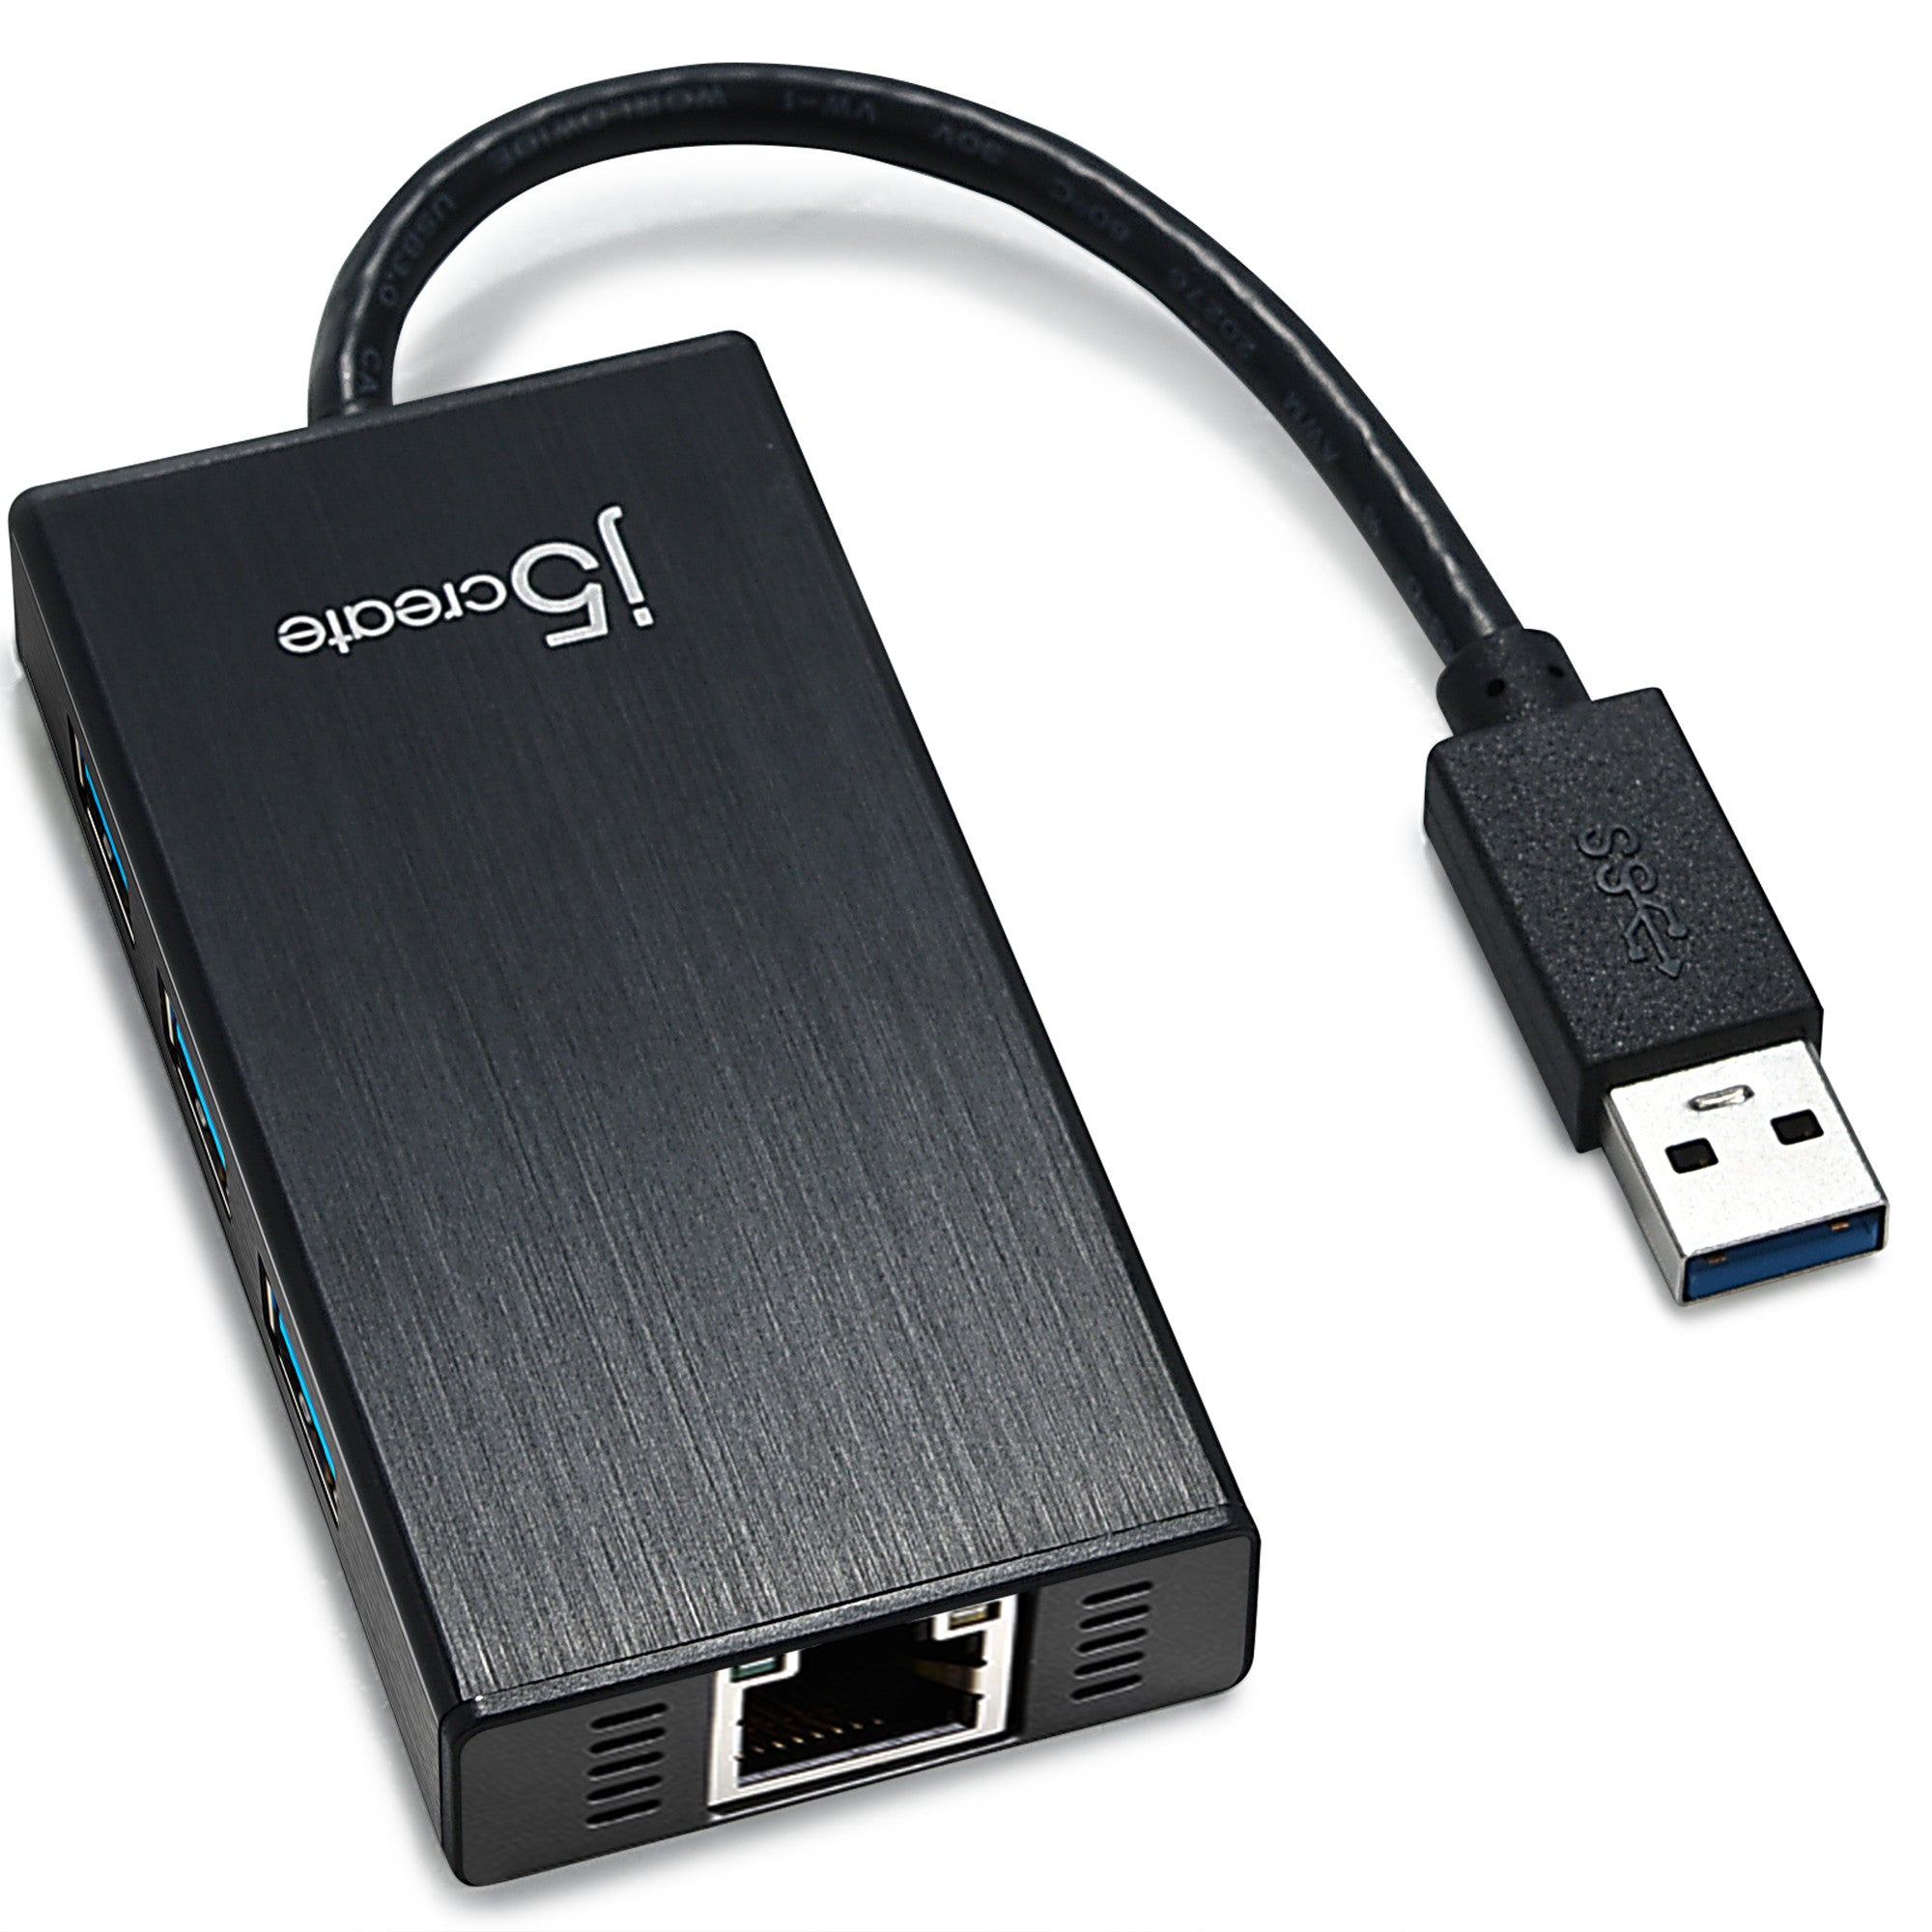 Yizhet Hub USB C 4 Puertos Ladron USB C a USB 3.0 Alta Velocidad 5 Gbps